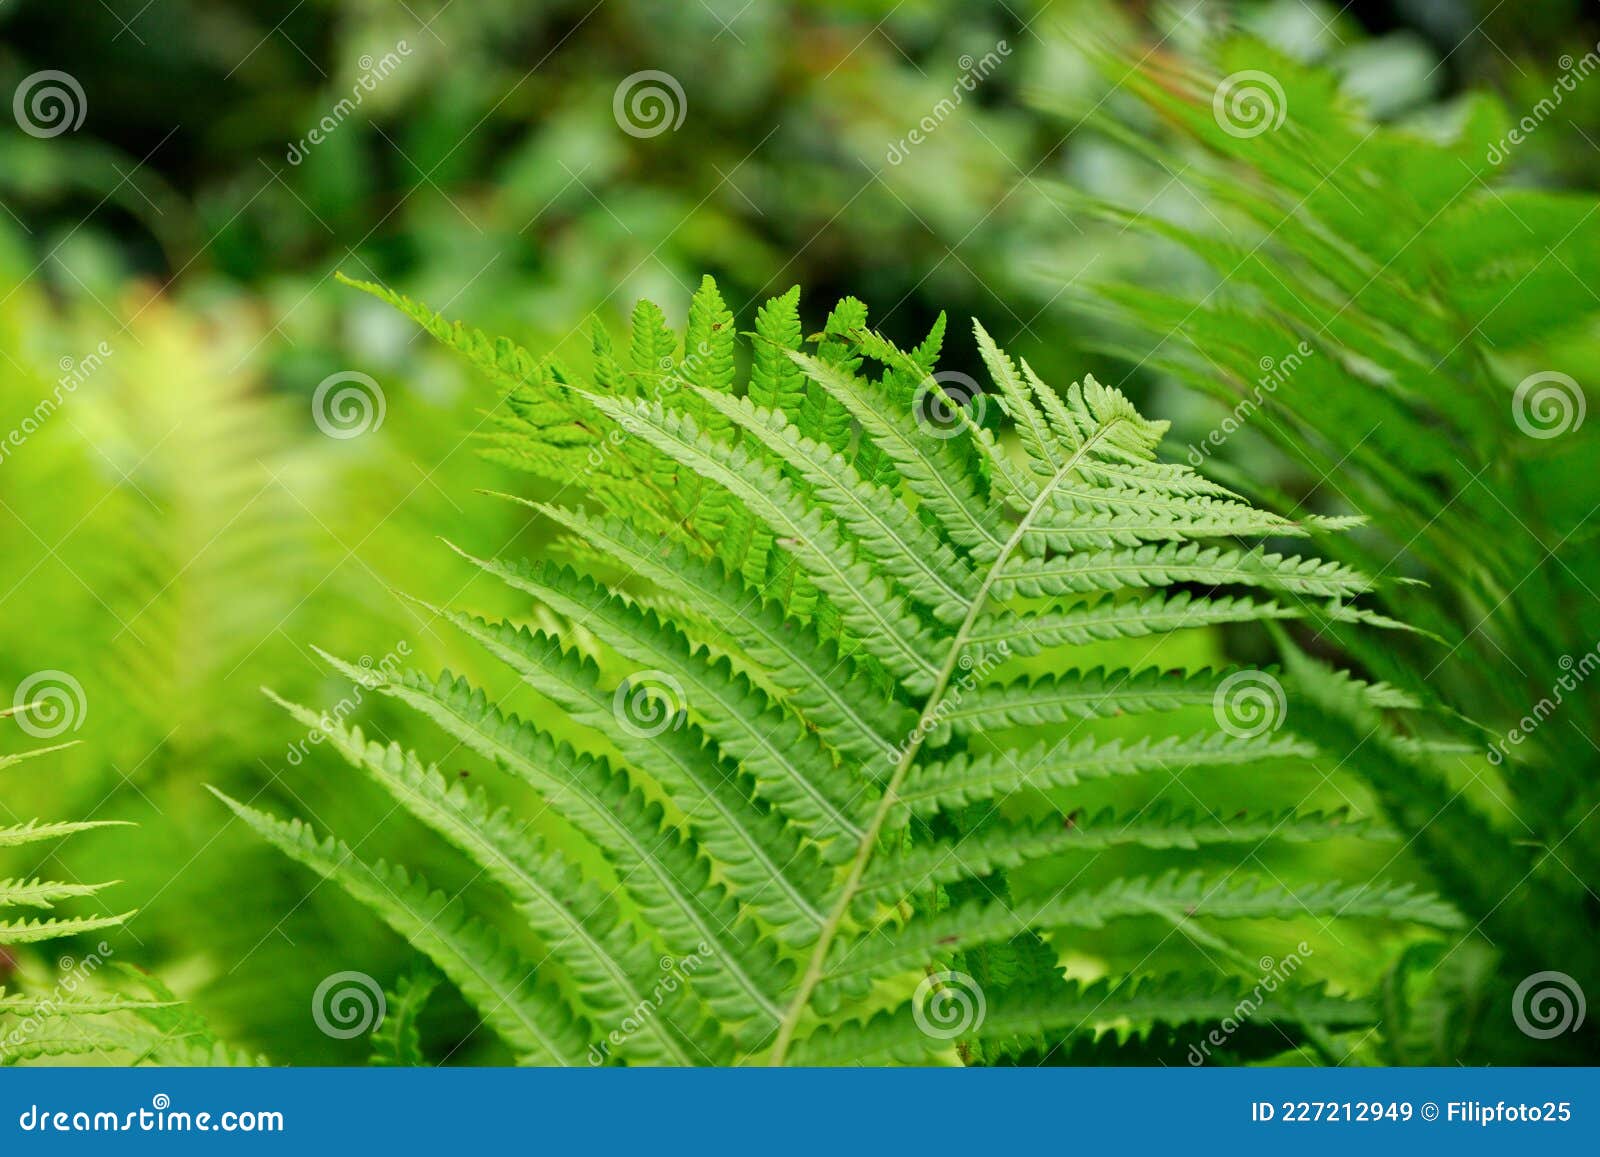 lush green fern detail